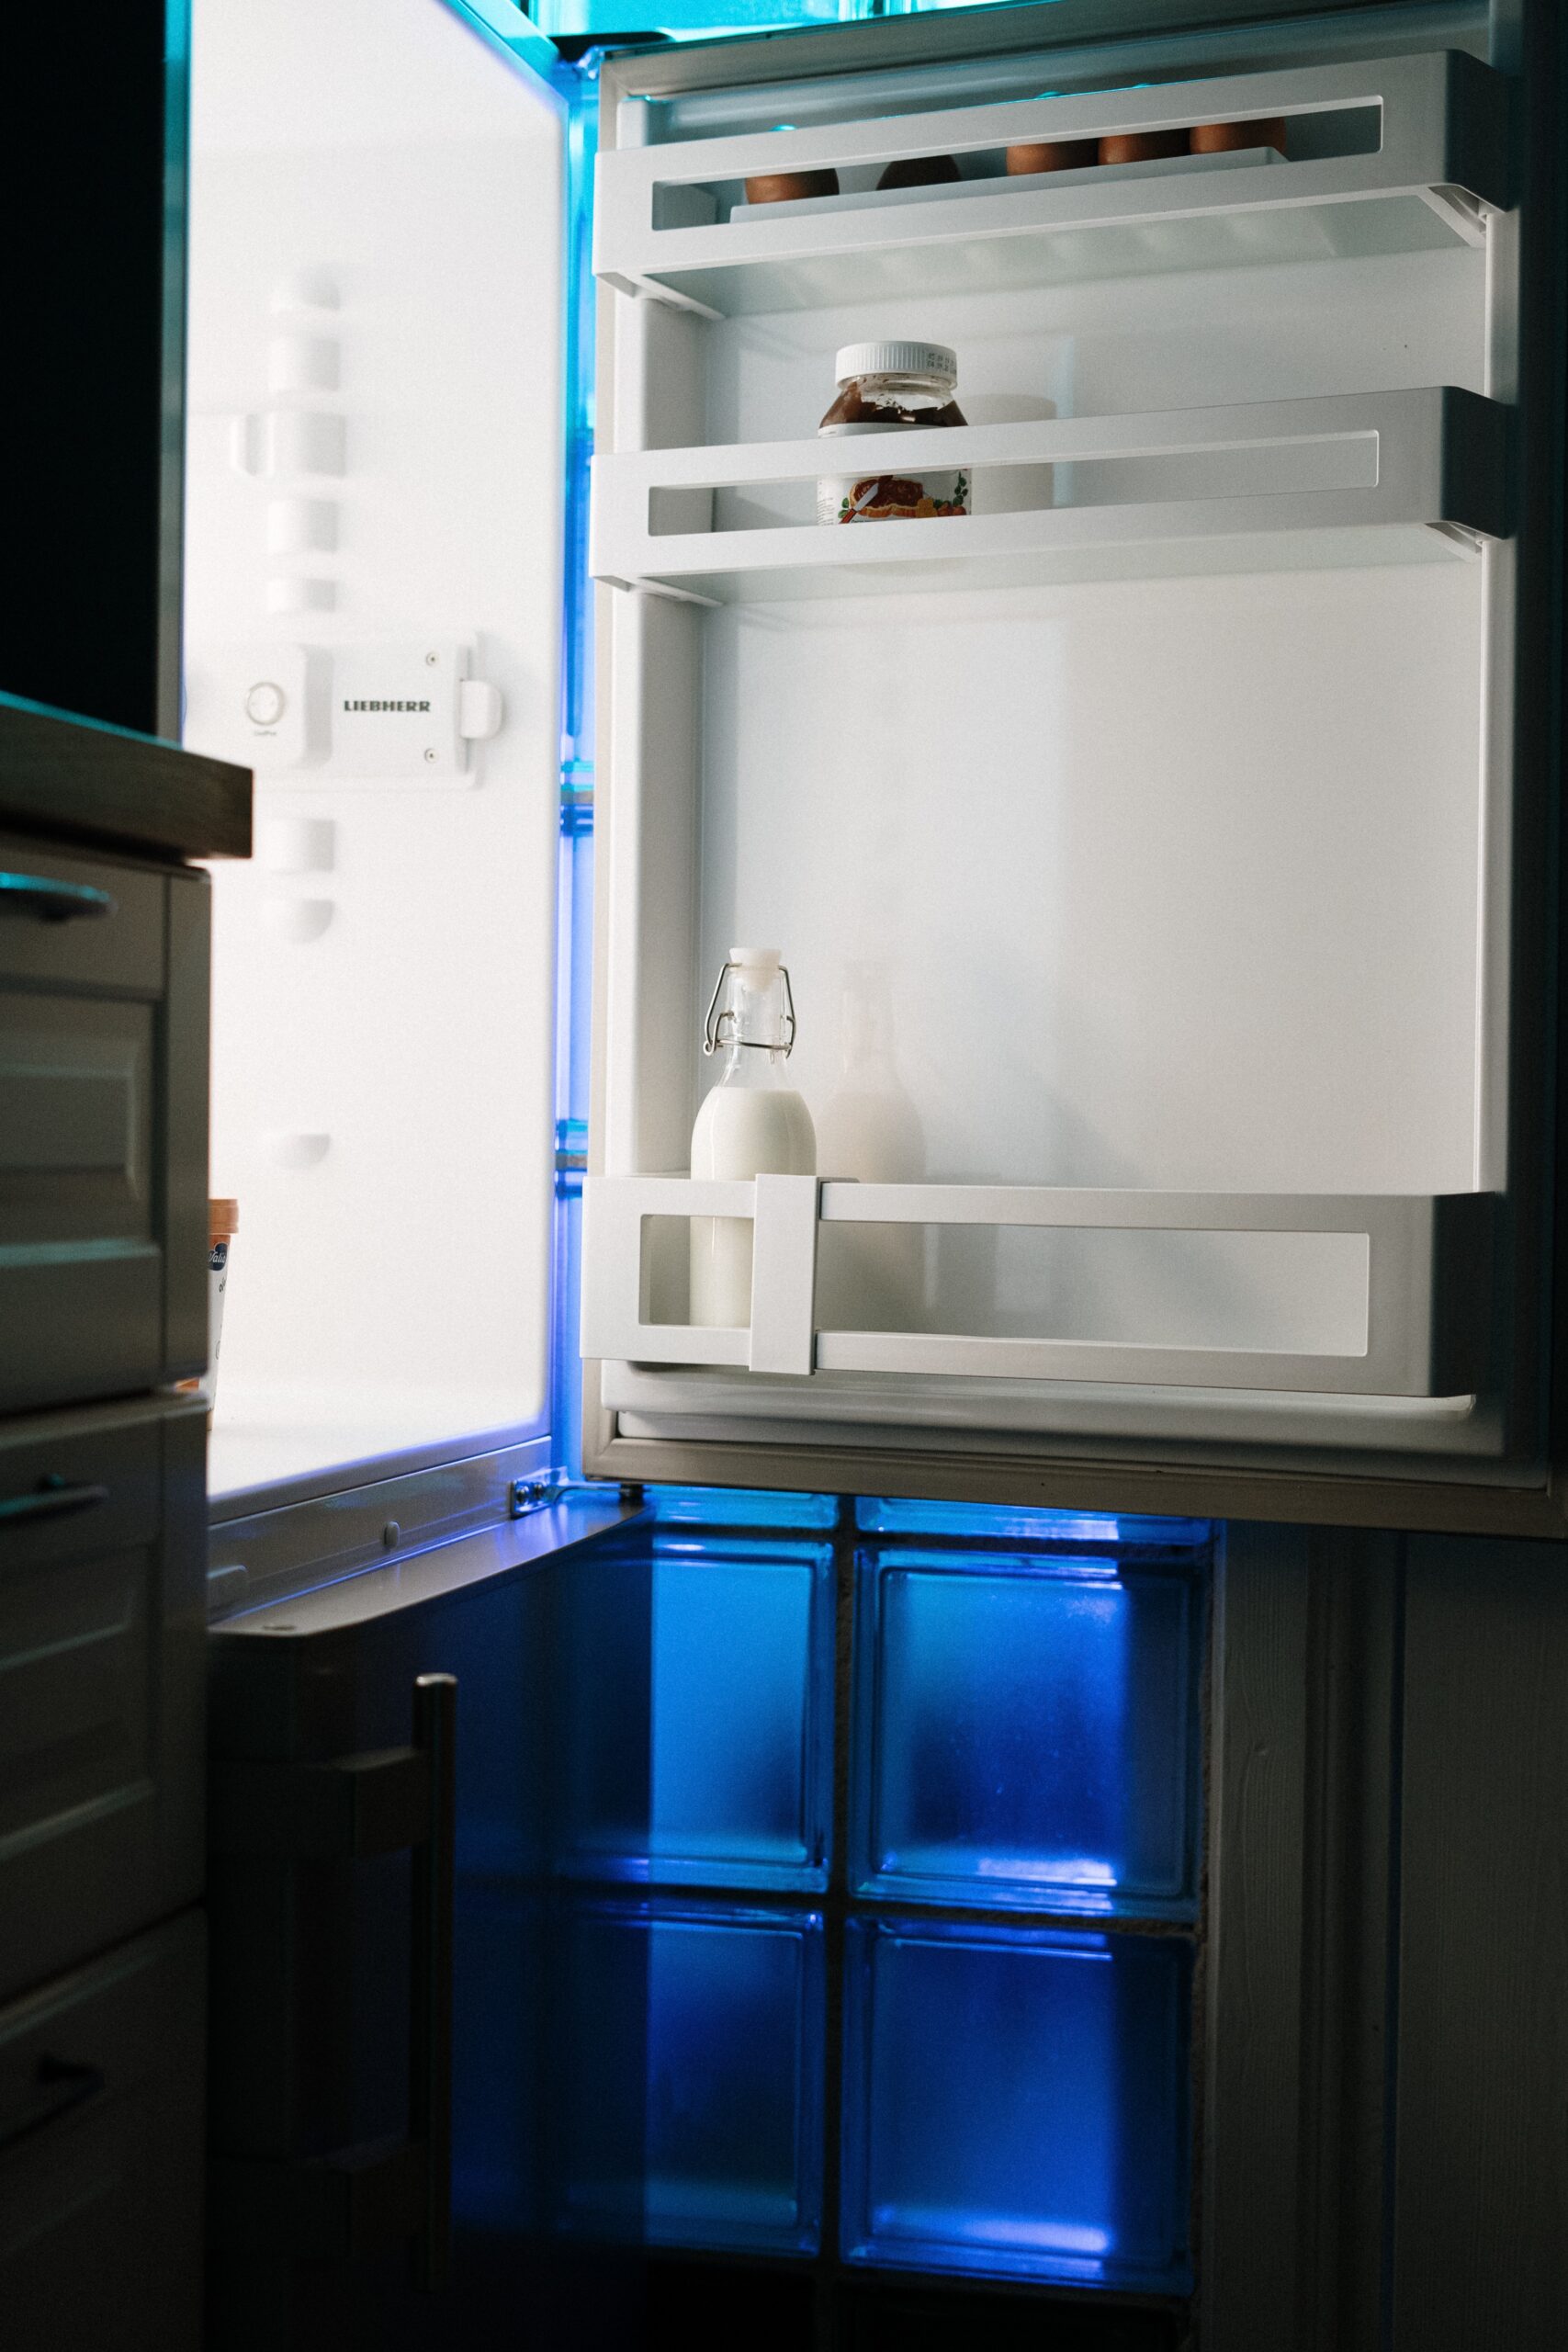 An open refrigerator image